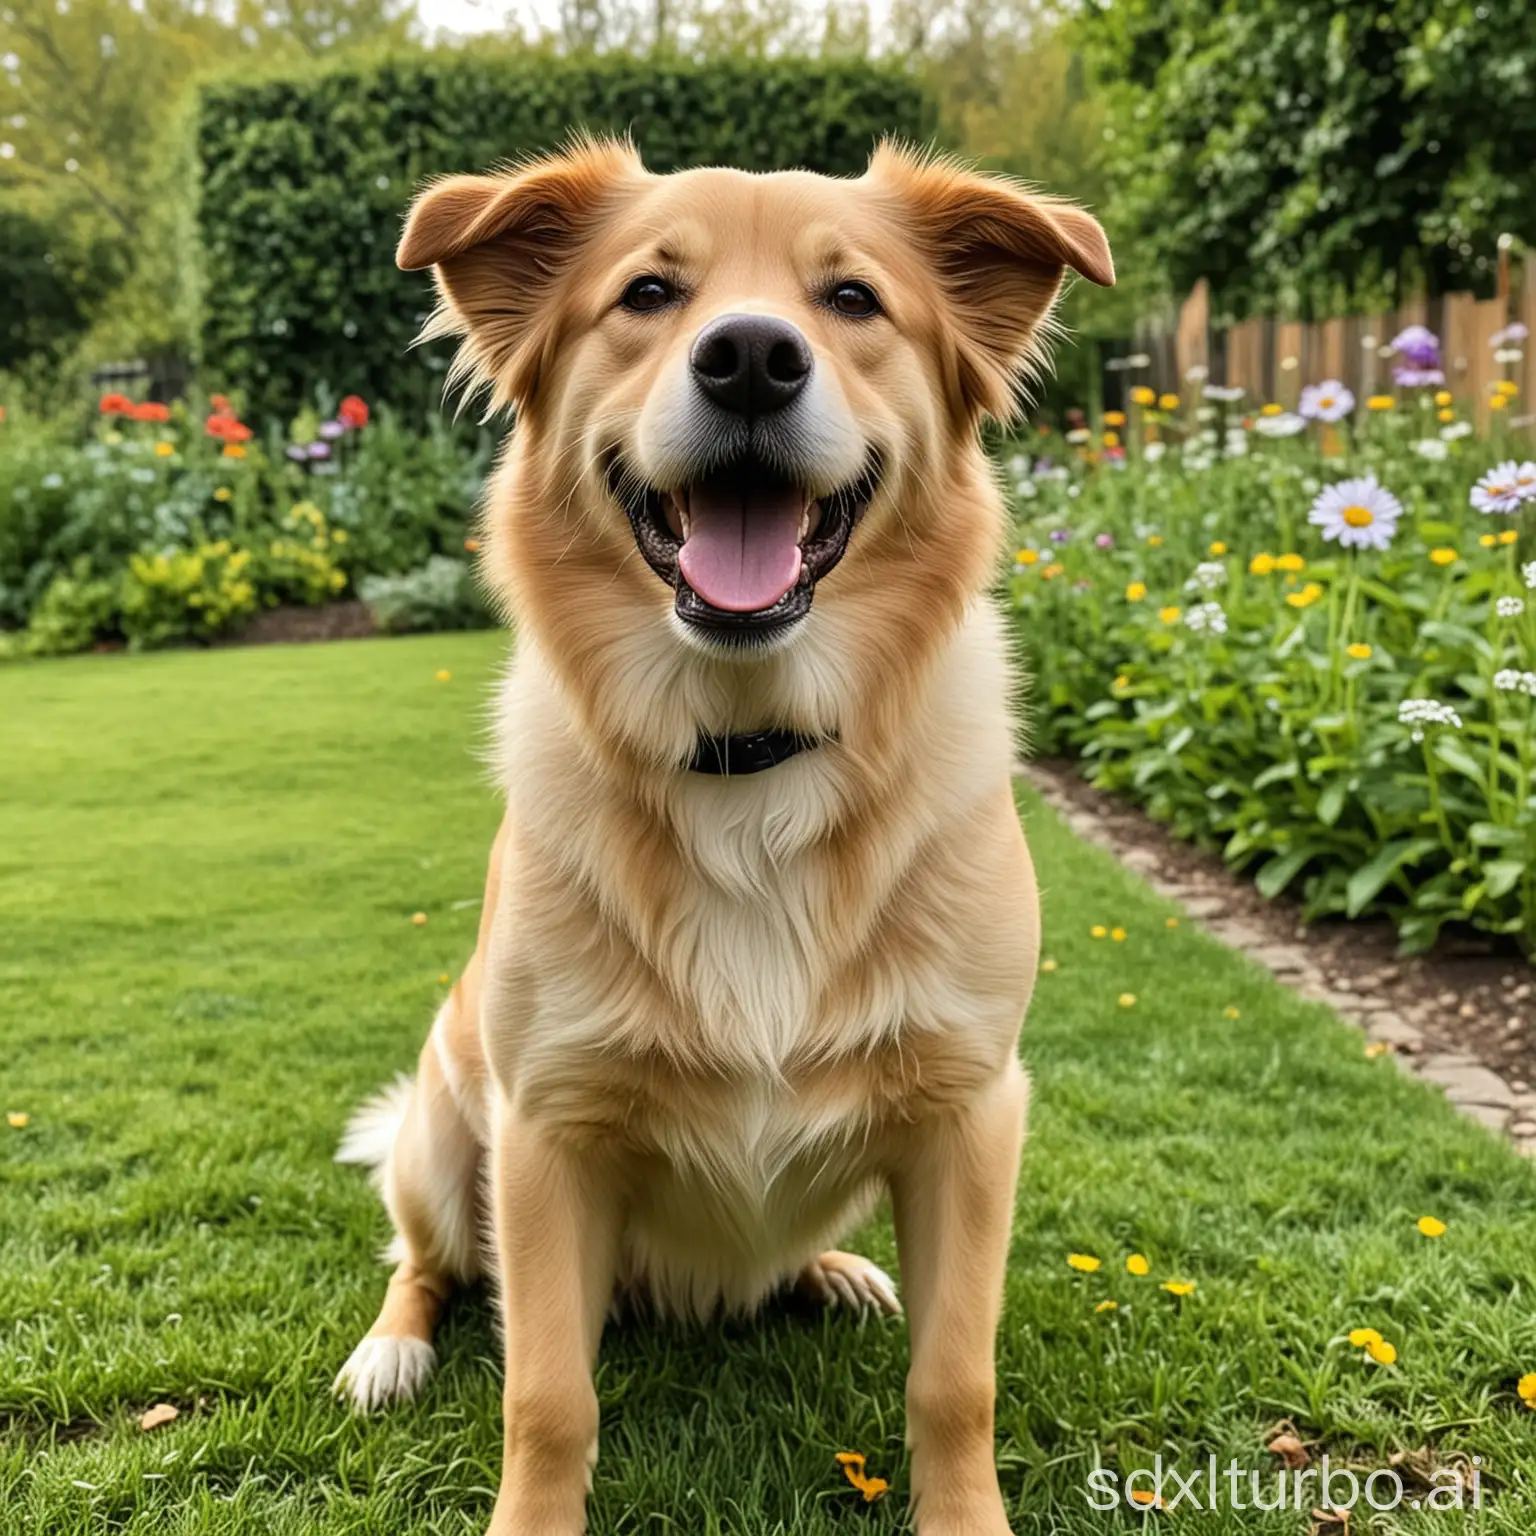 Cheerful-Dog-Enjoying-Sunny-Day-in-the-Vibrant-Garden